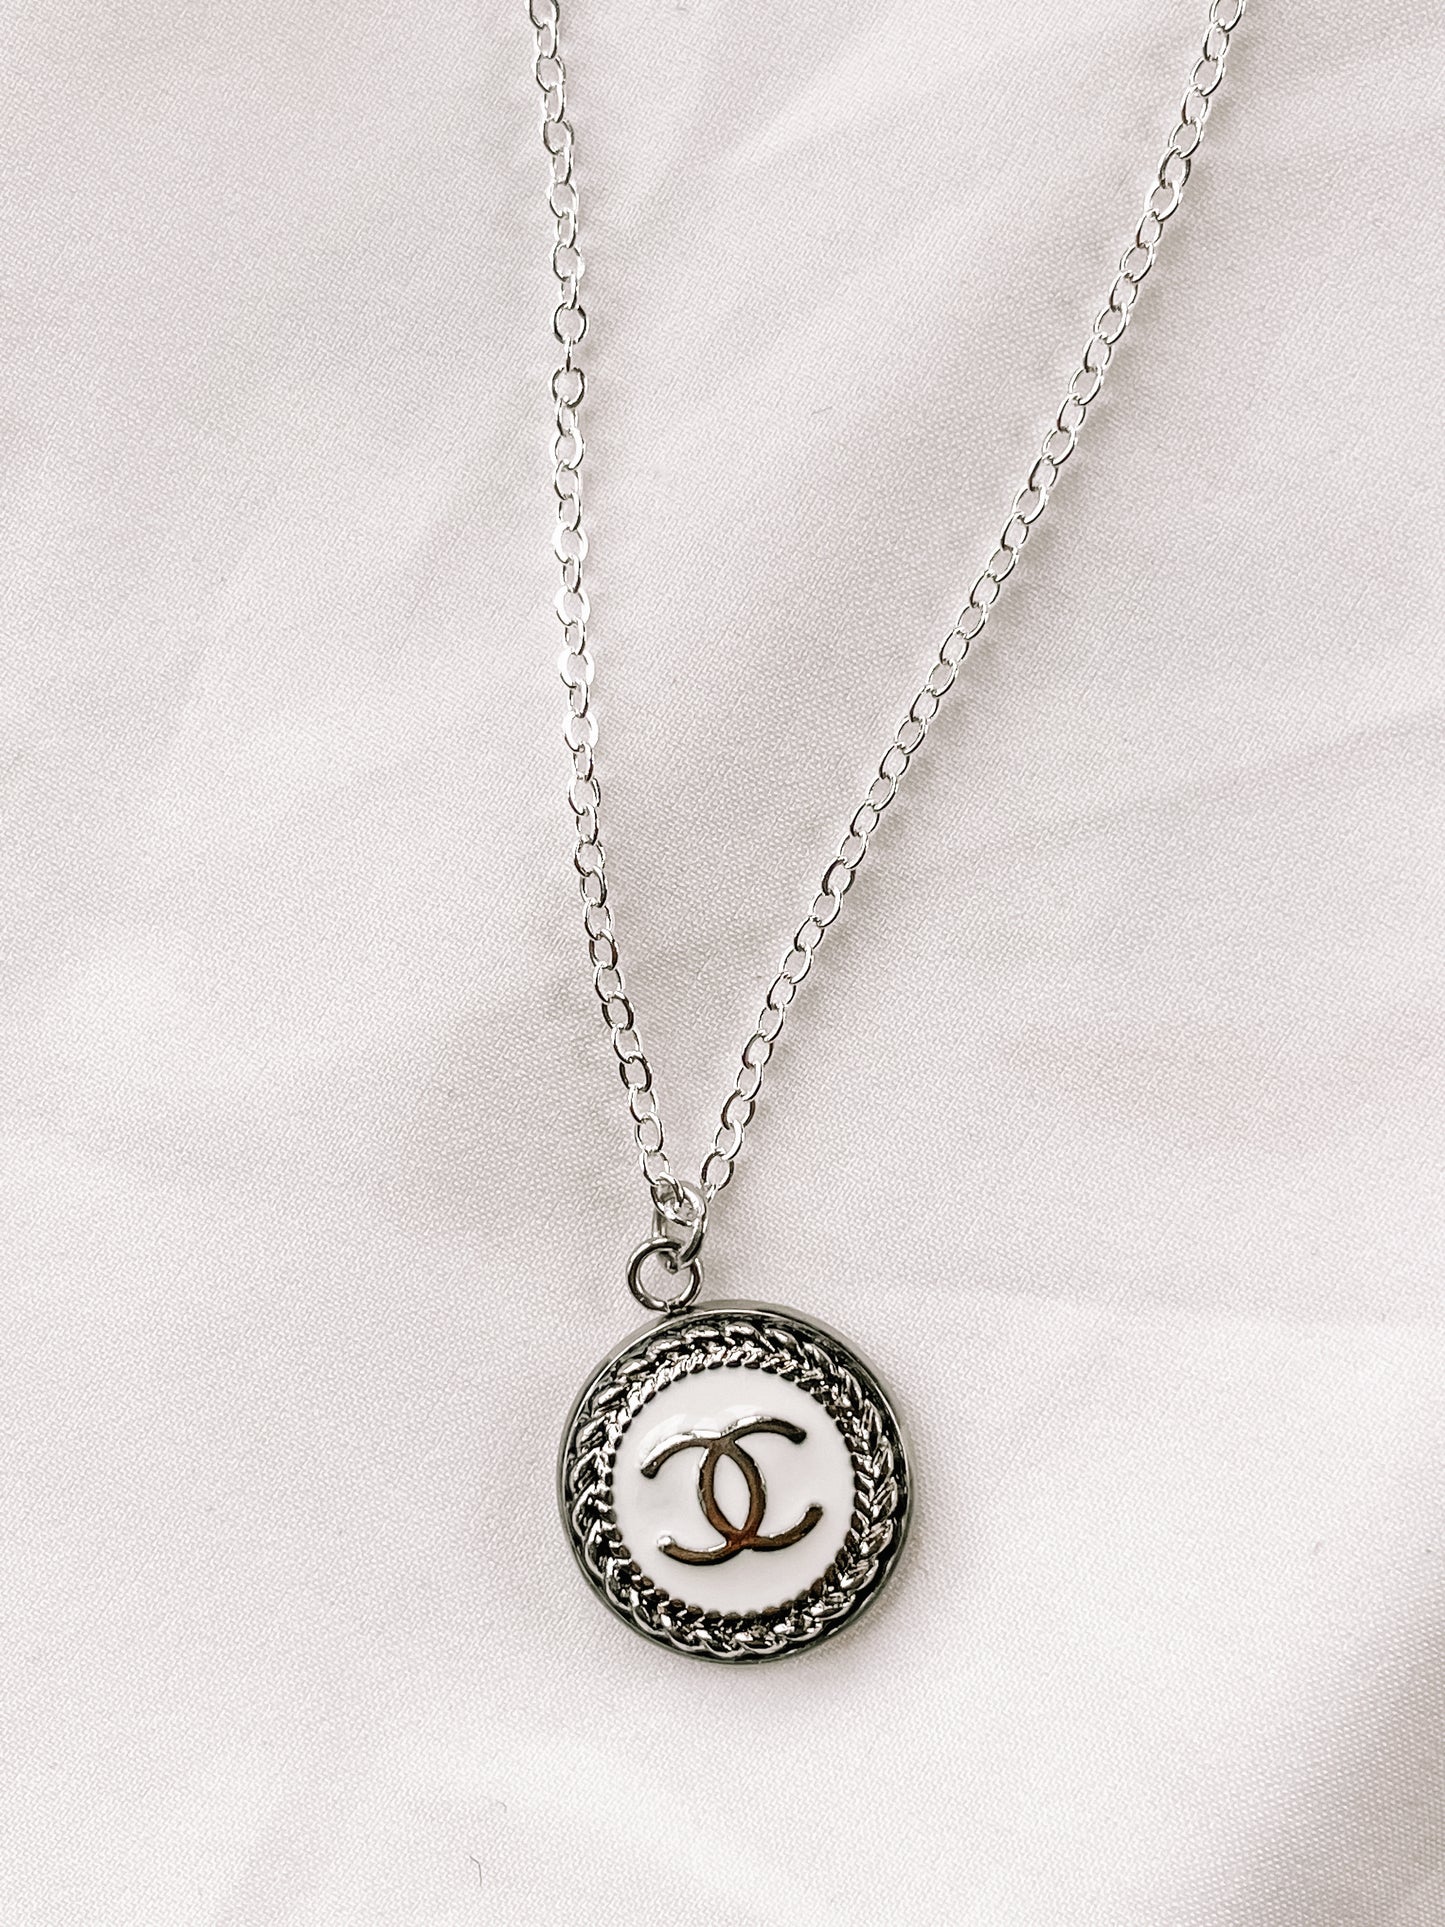 Repurposed Chanel Pendant necklace